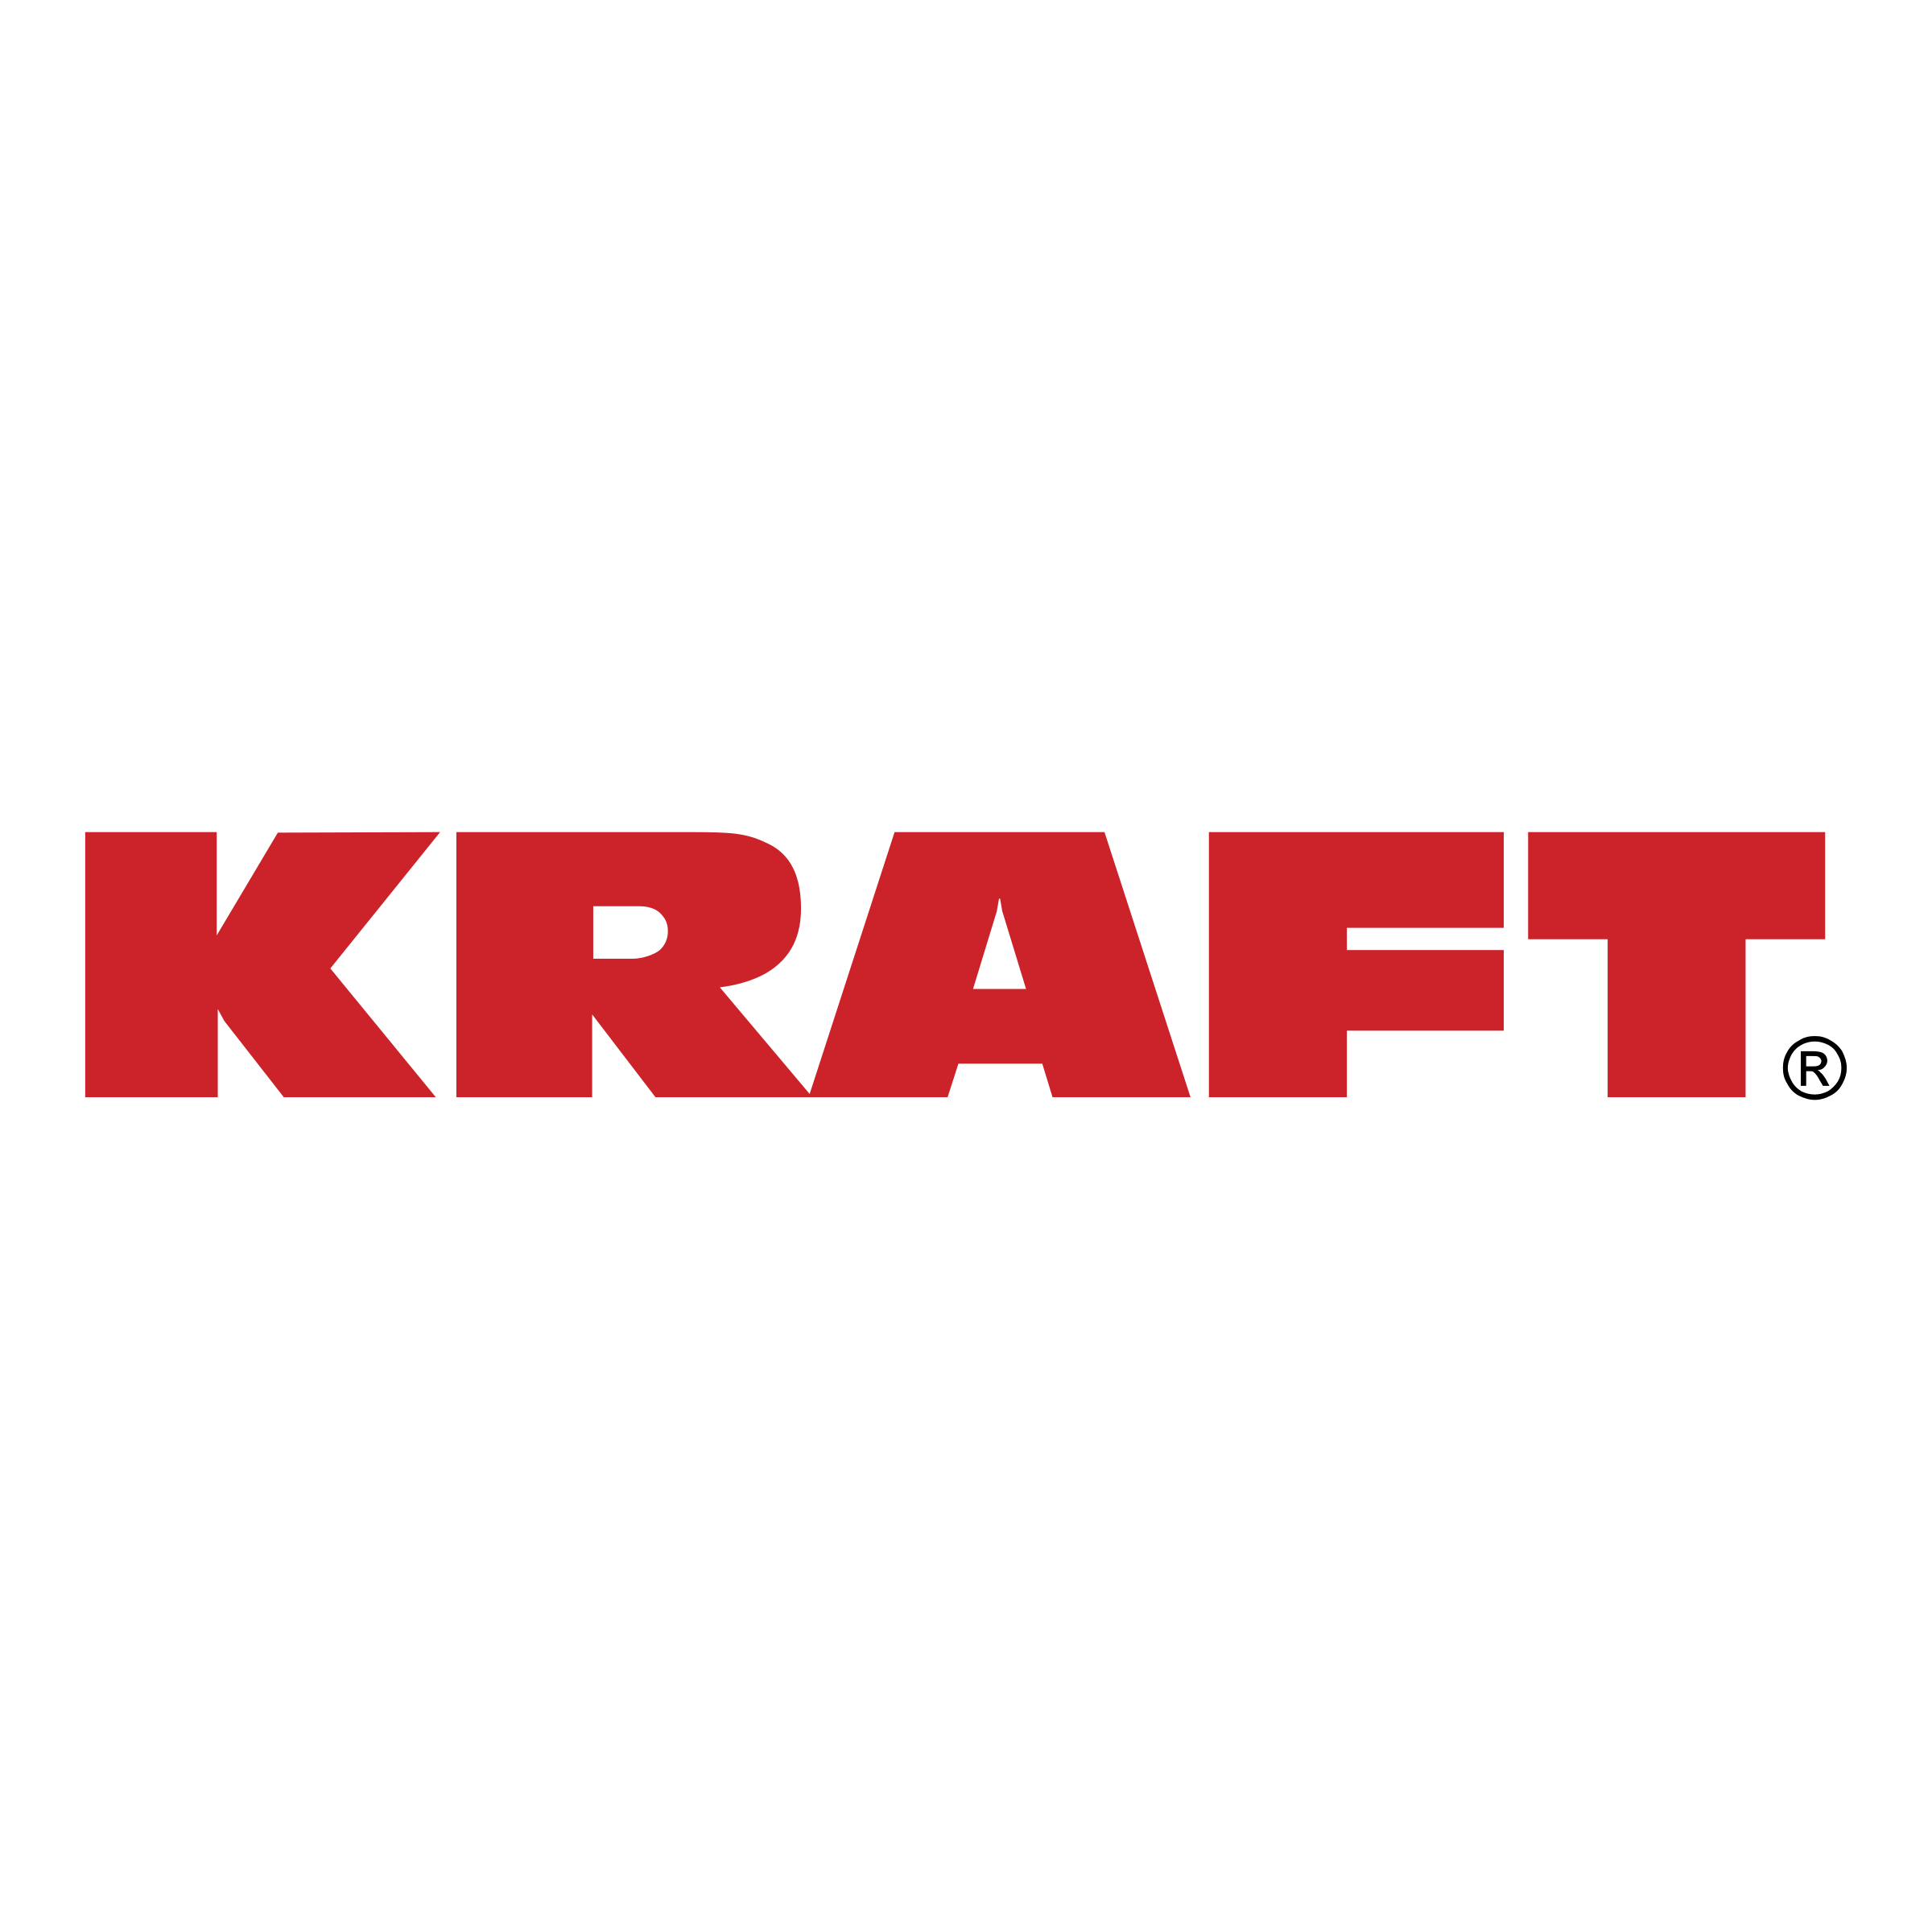 Kraft Logo - Kraft Logo PNG Transparent & SVG Vector - Freebie Supply